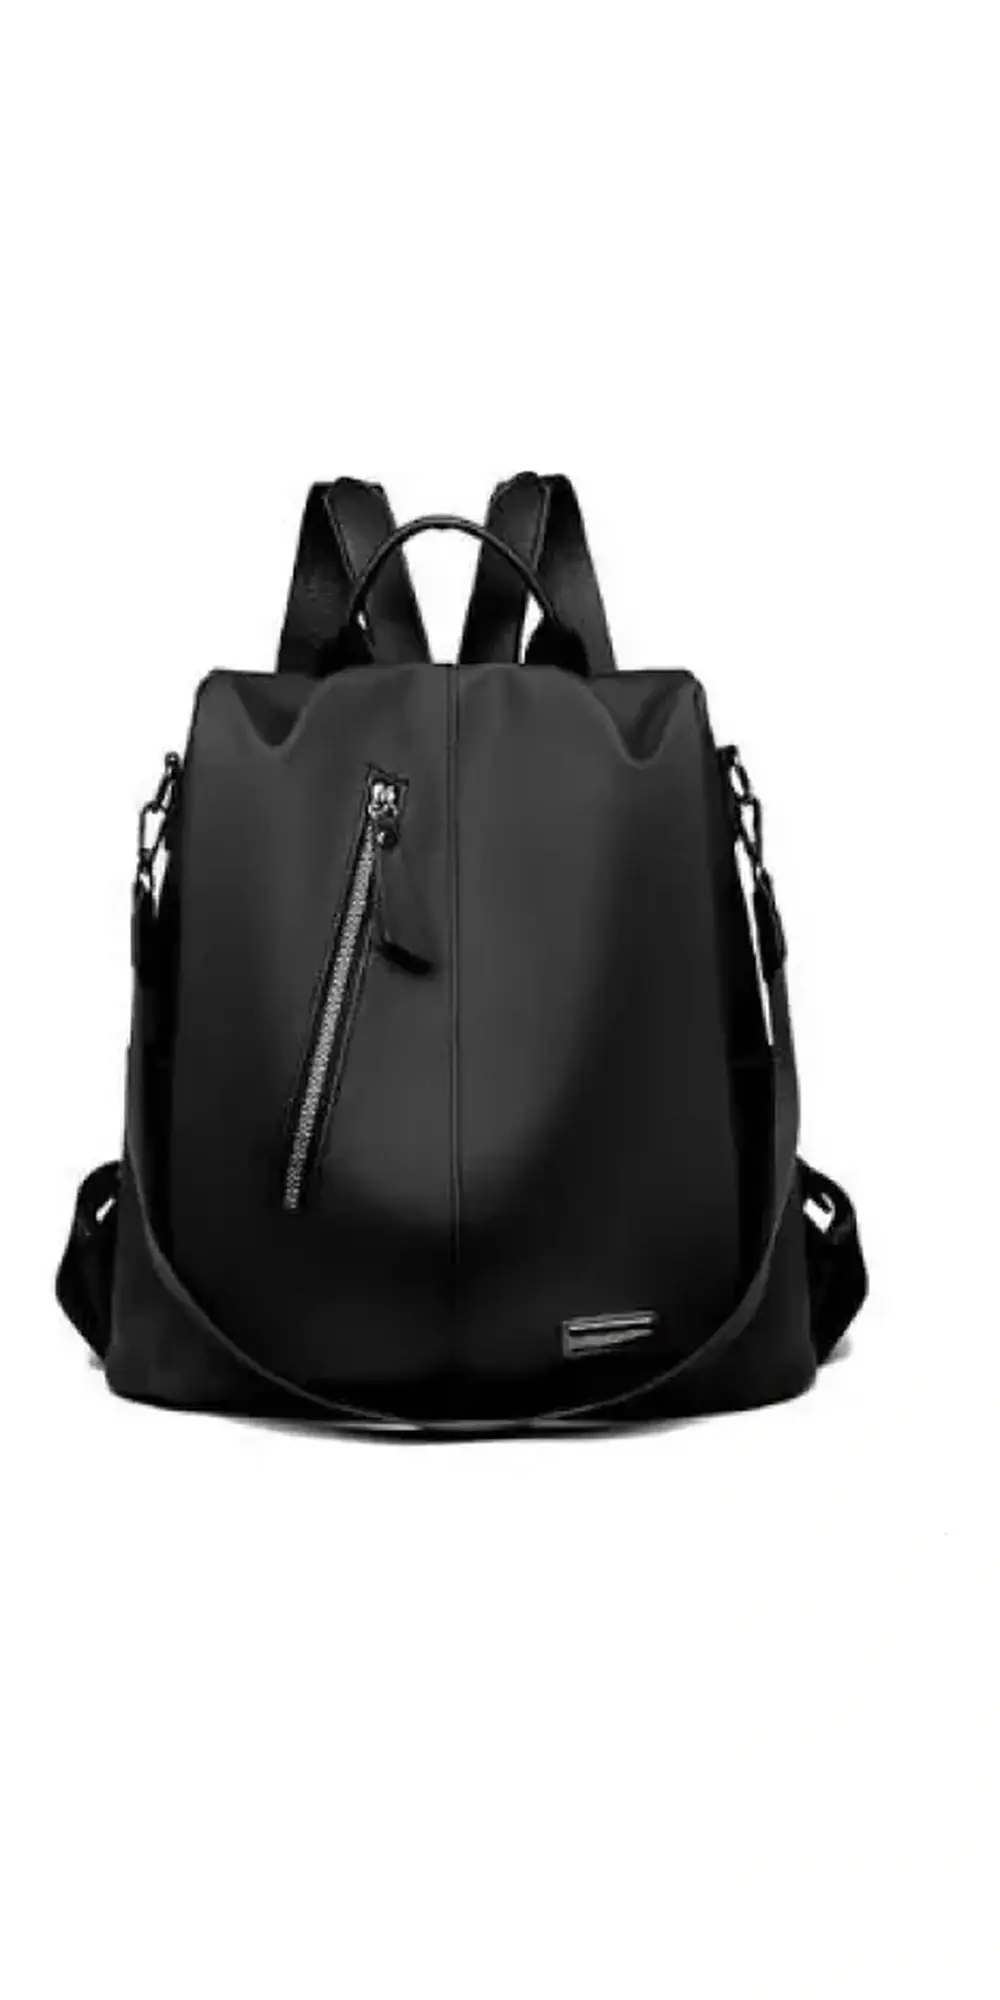 Oxford Cloth Backpack Nylon School Bag Women - Black - bags